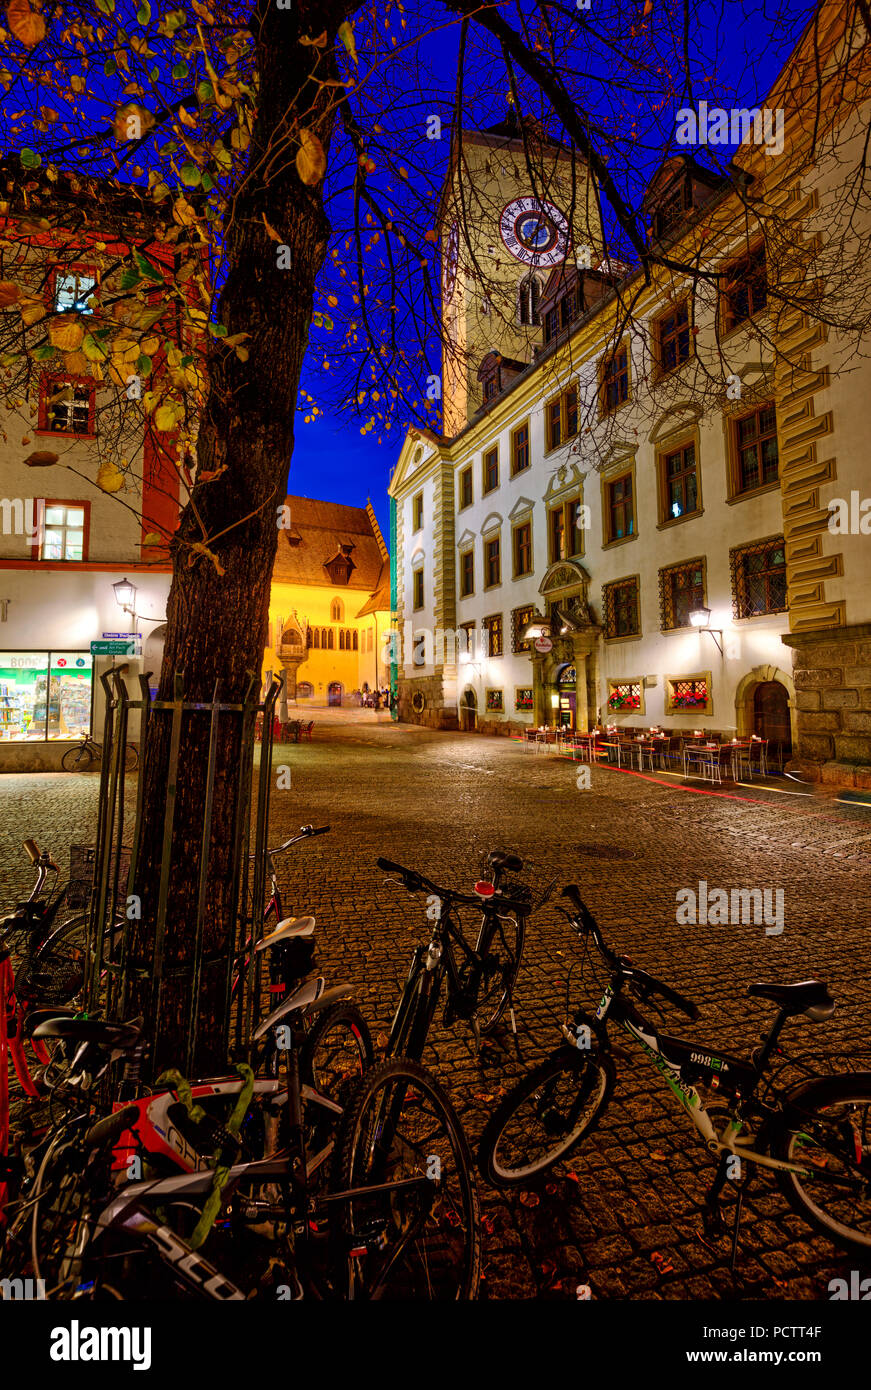 Hotel Bischofshof, Restaurant, Facade, old town, Blue Hour, Regensburg, Upper Palatinate, Bavaria, Germany, Europe Stock Photo